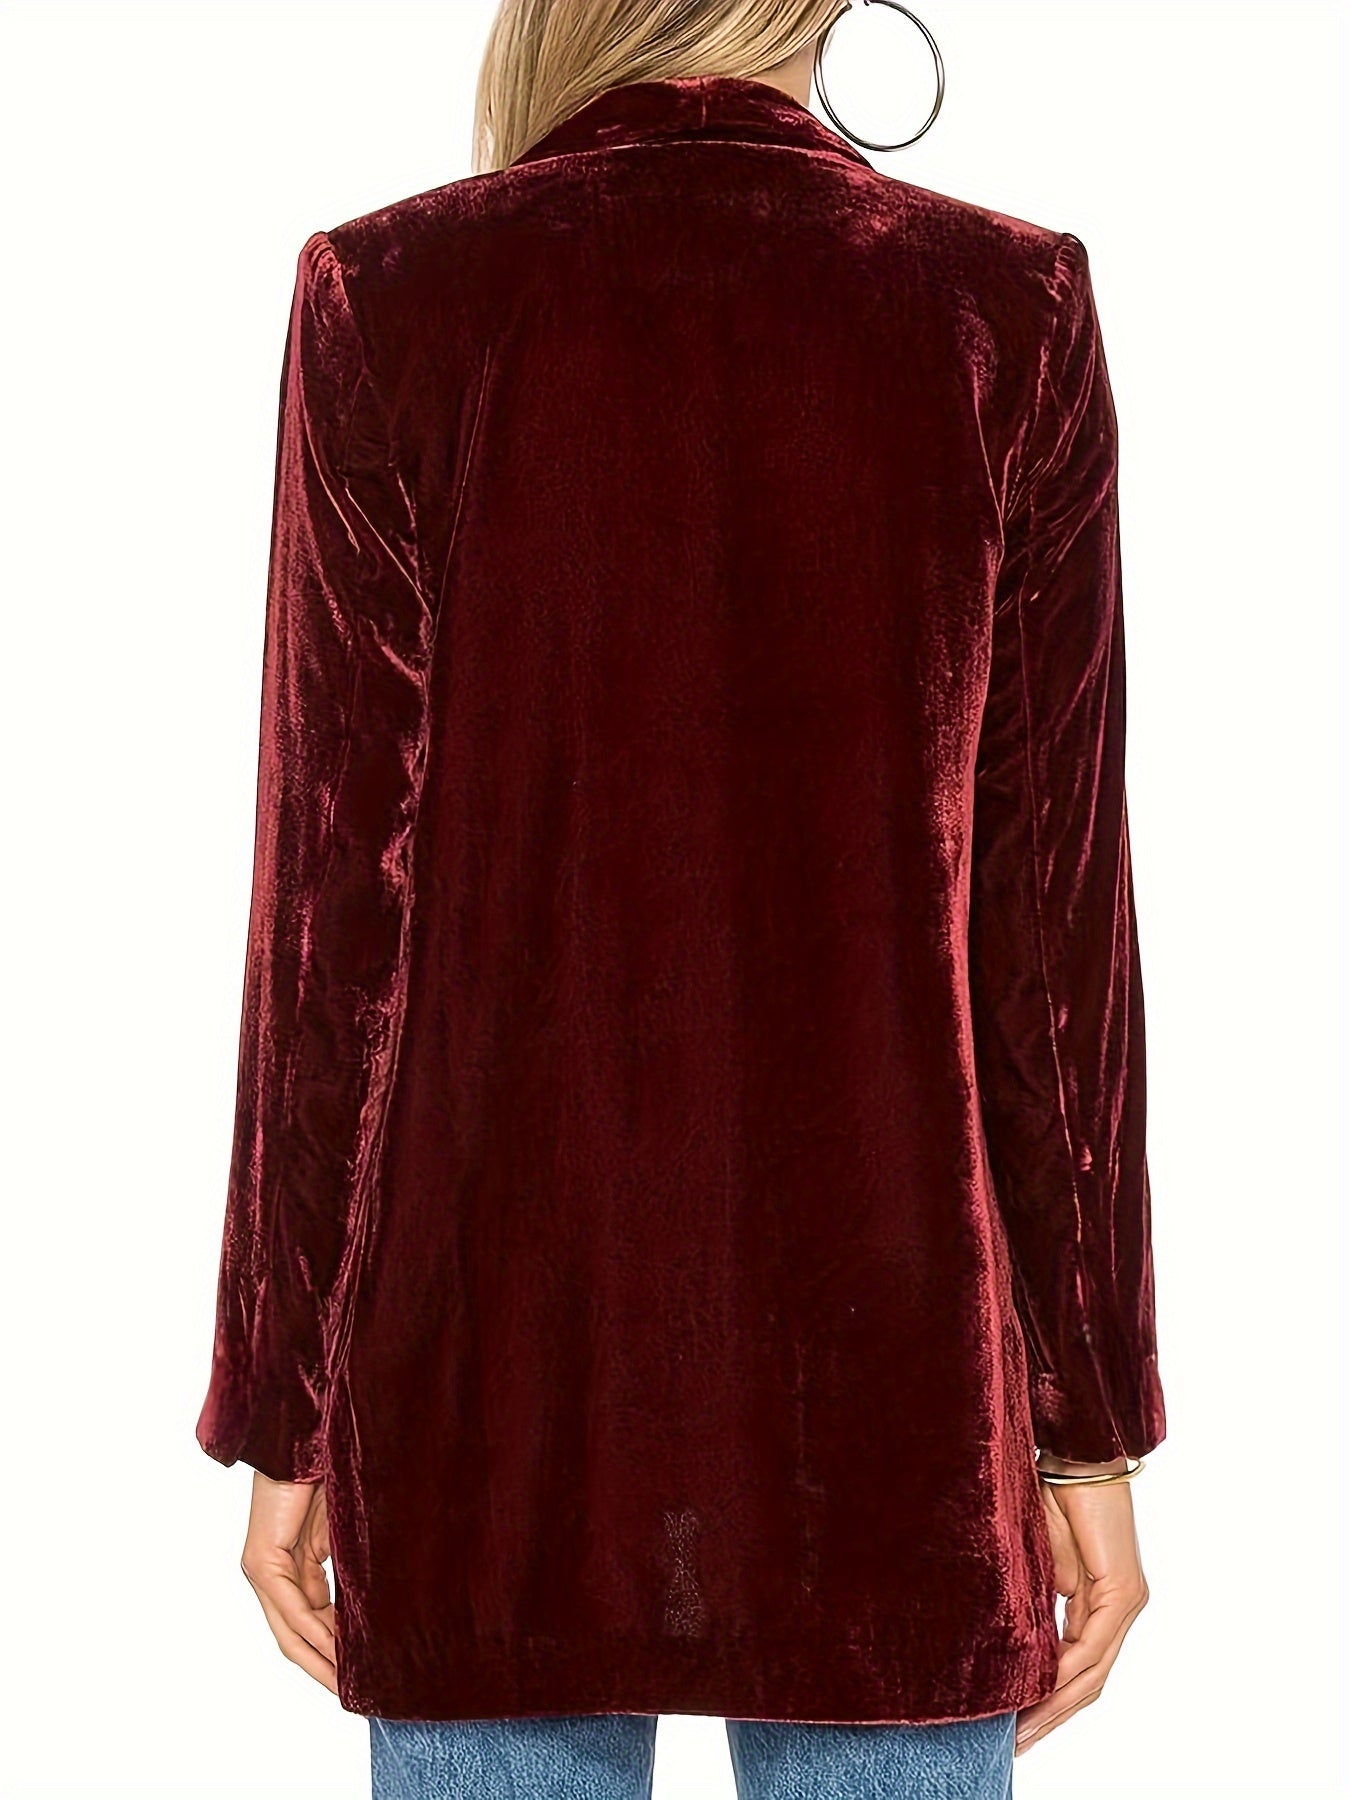 Solid Lapel Open Front Jacket, Versatile Long Sleeve Velvet Outwear For Fall & Winter, Women's Clothing